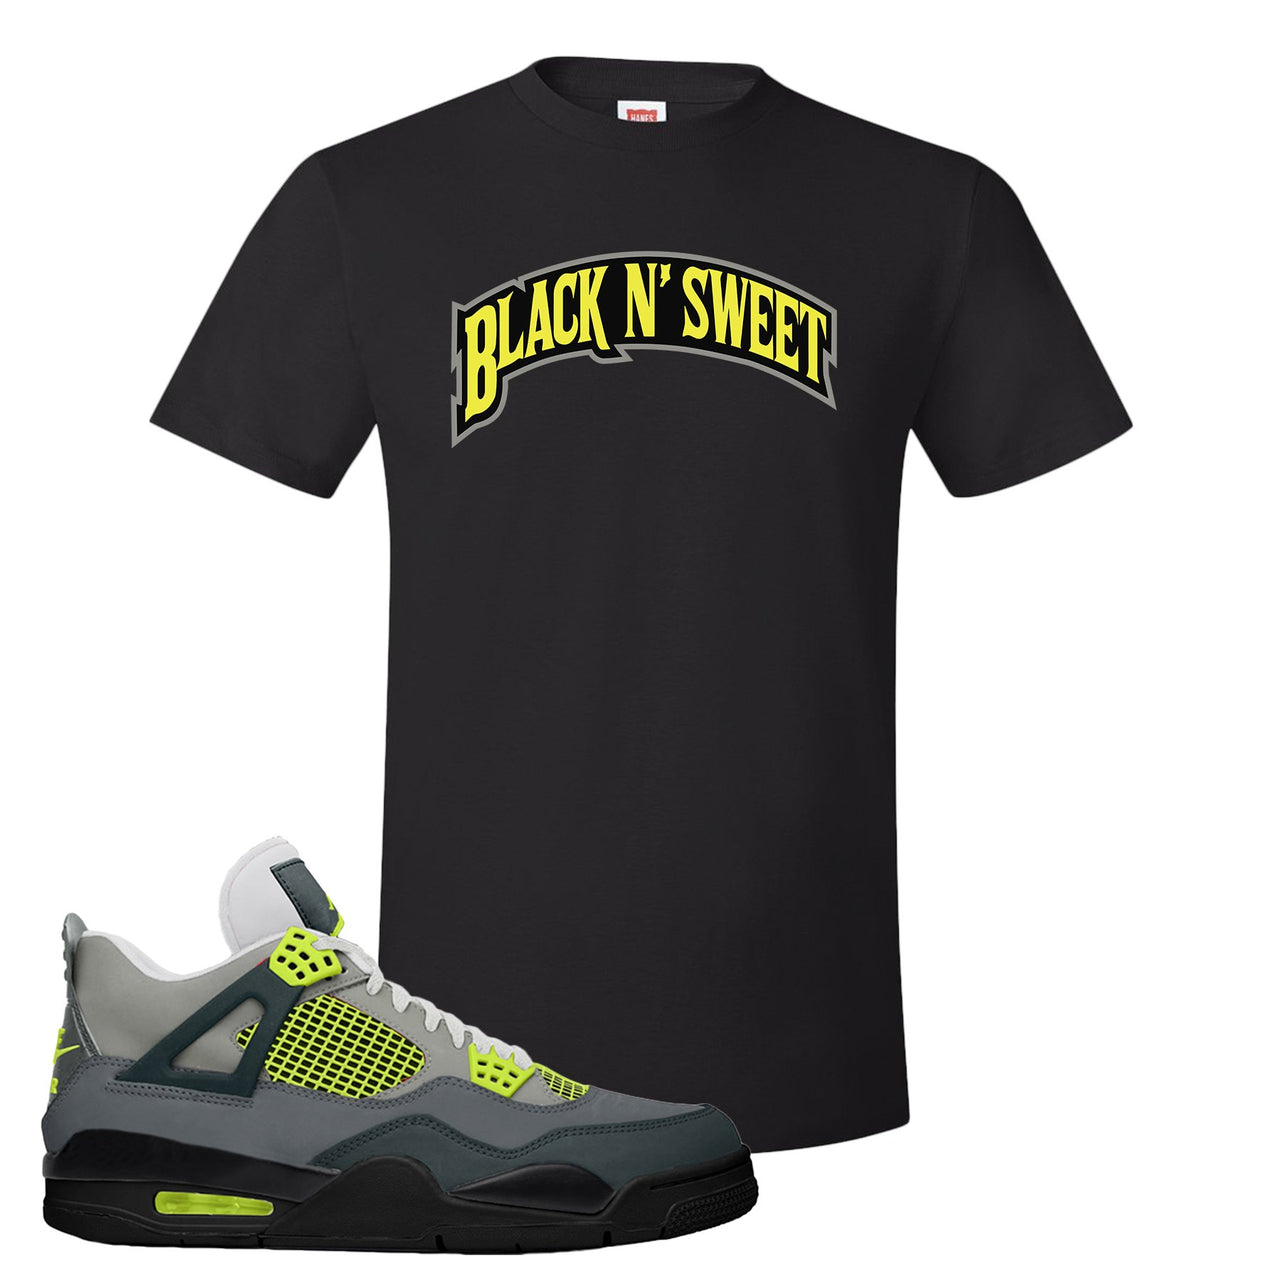 Jordan 4 Neon Sneaker Black T Shirt | Tees to match Nike Air Jordan 4 Neon Shoes | Black N Sweet Arch